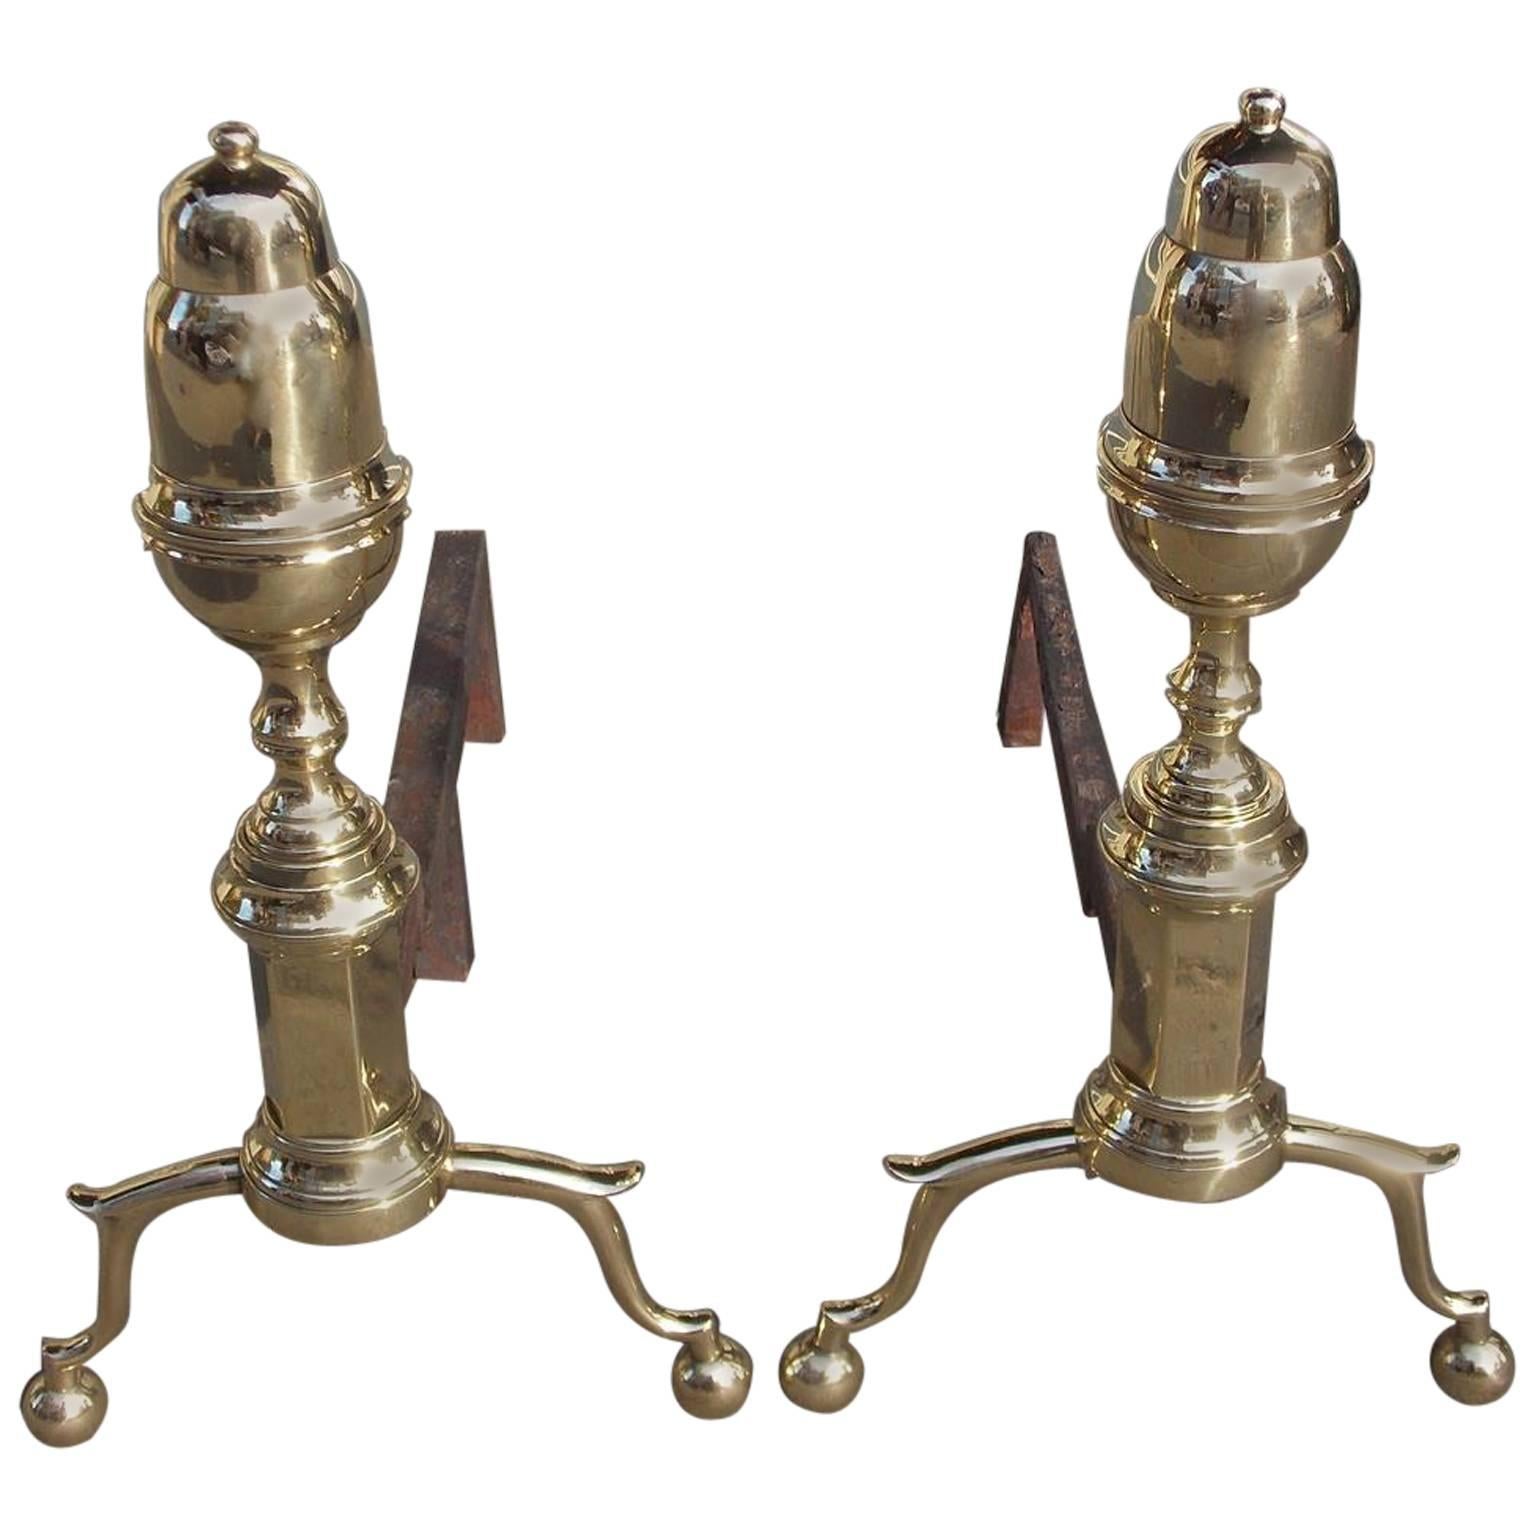 Pair of American Brass Elongated Acorn Top Andirons, New York, Circa 1800